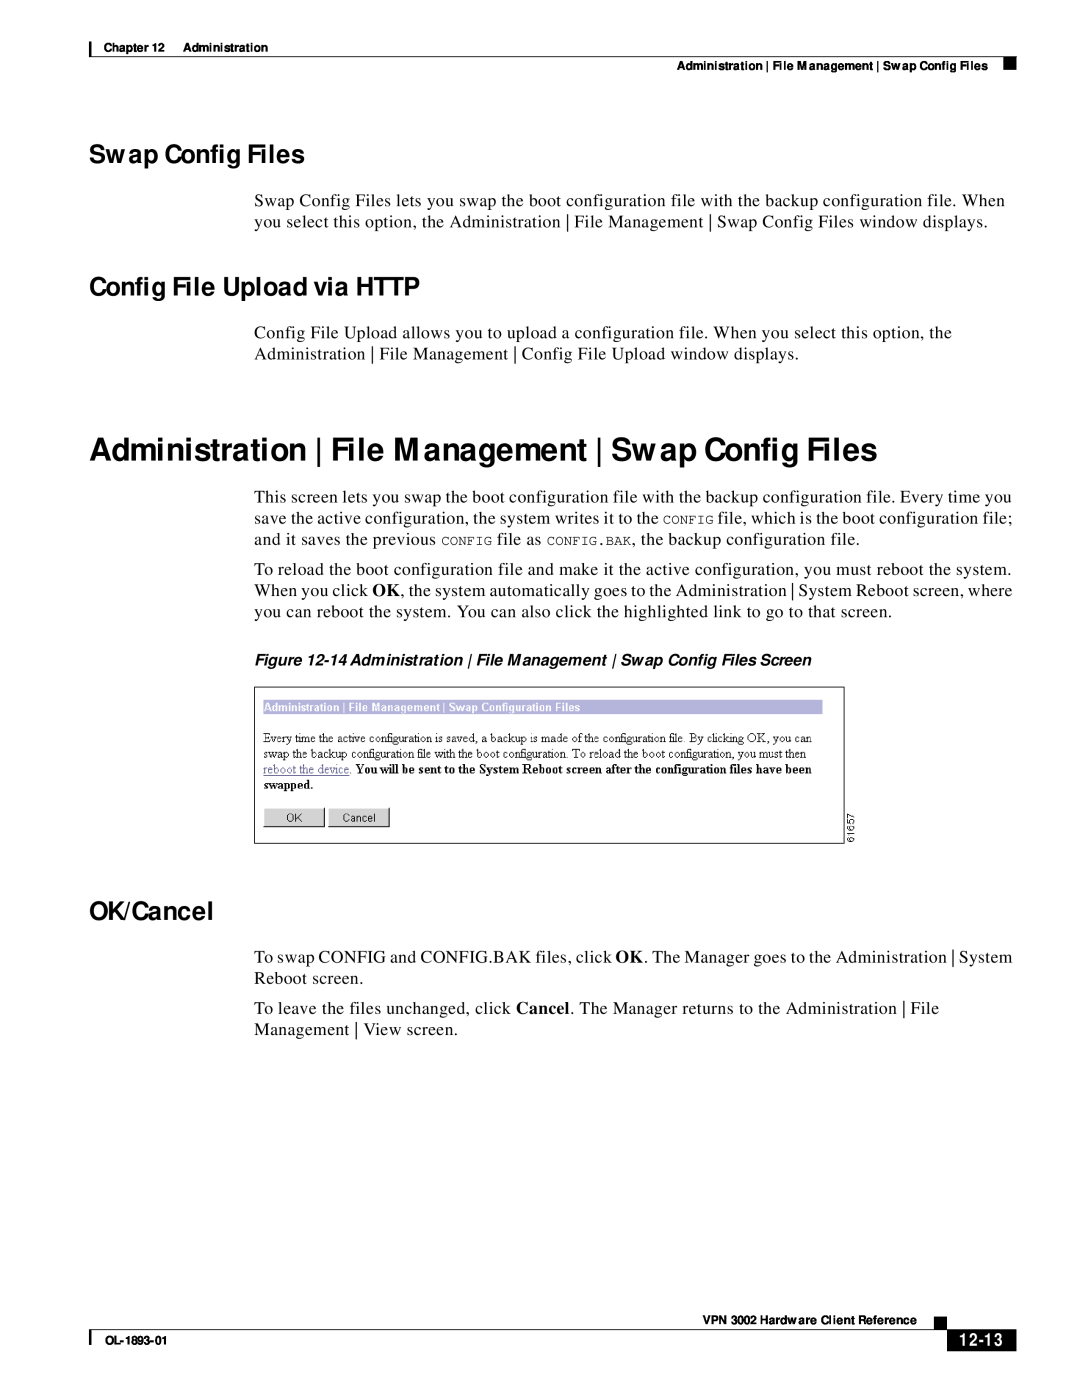 Cisco Systems VPN 3002 manual Swap Config Files, Config File Upload via HTTP, OK/Cancel, 12-13 